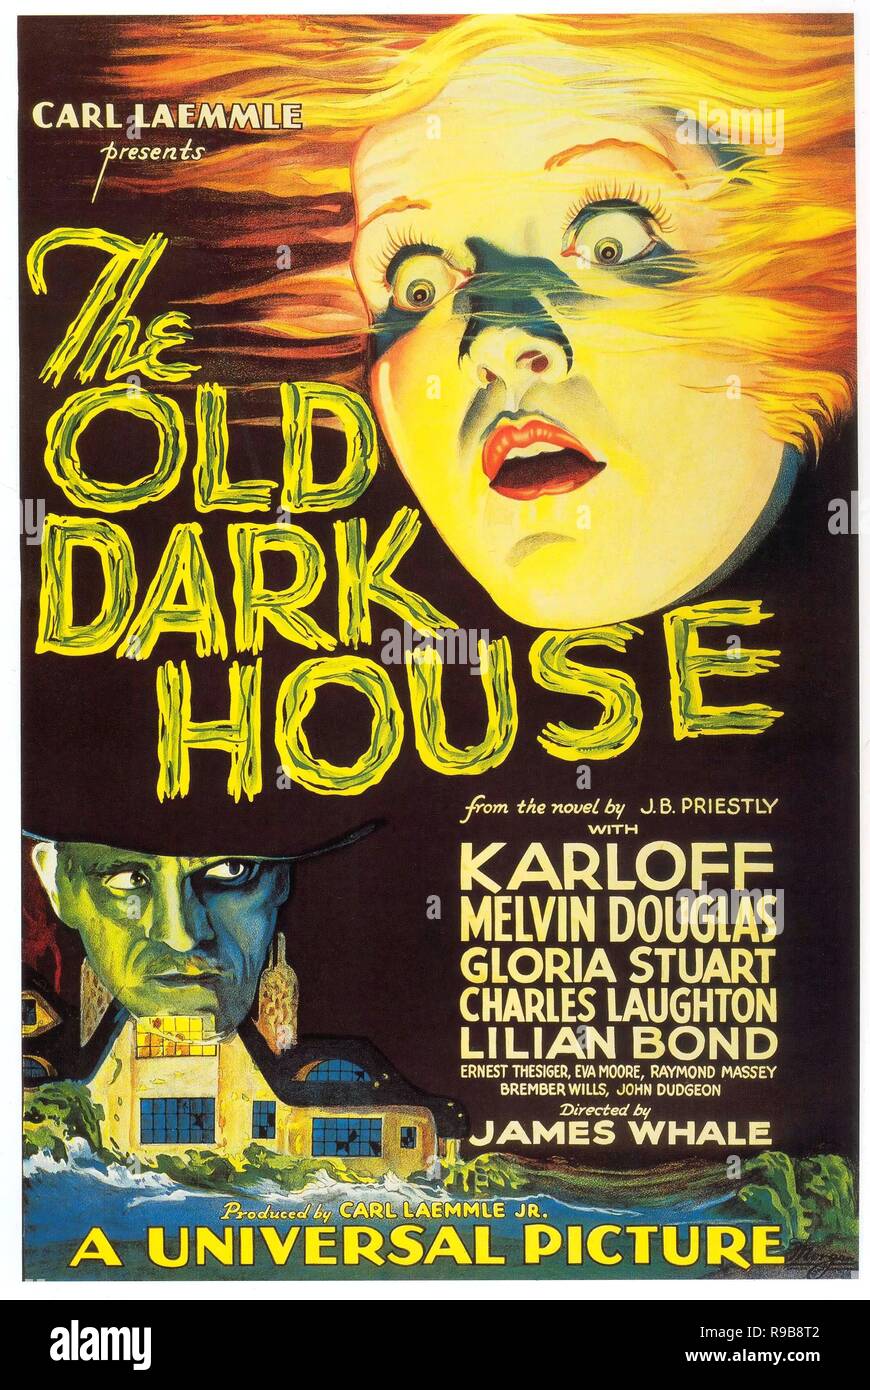 Original film title: THE OLD DARK HOUSE. English title: THE OLD DARK HOUSE. Year: 1932. Director: JAMES WHALE. Credit: UNIVERSAL PICTURES / Album Stock Photo